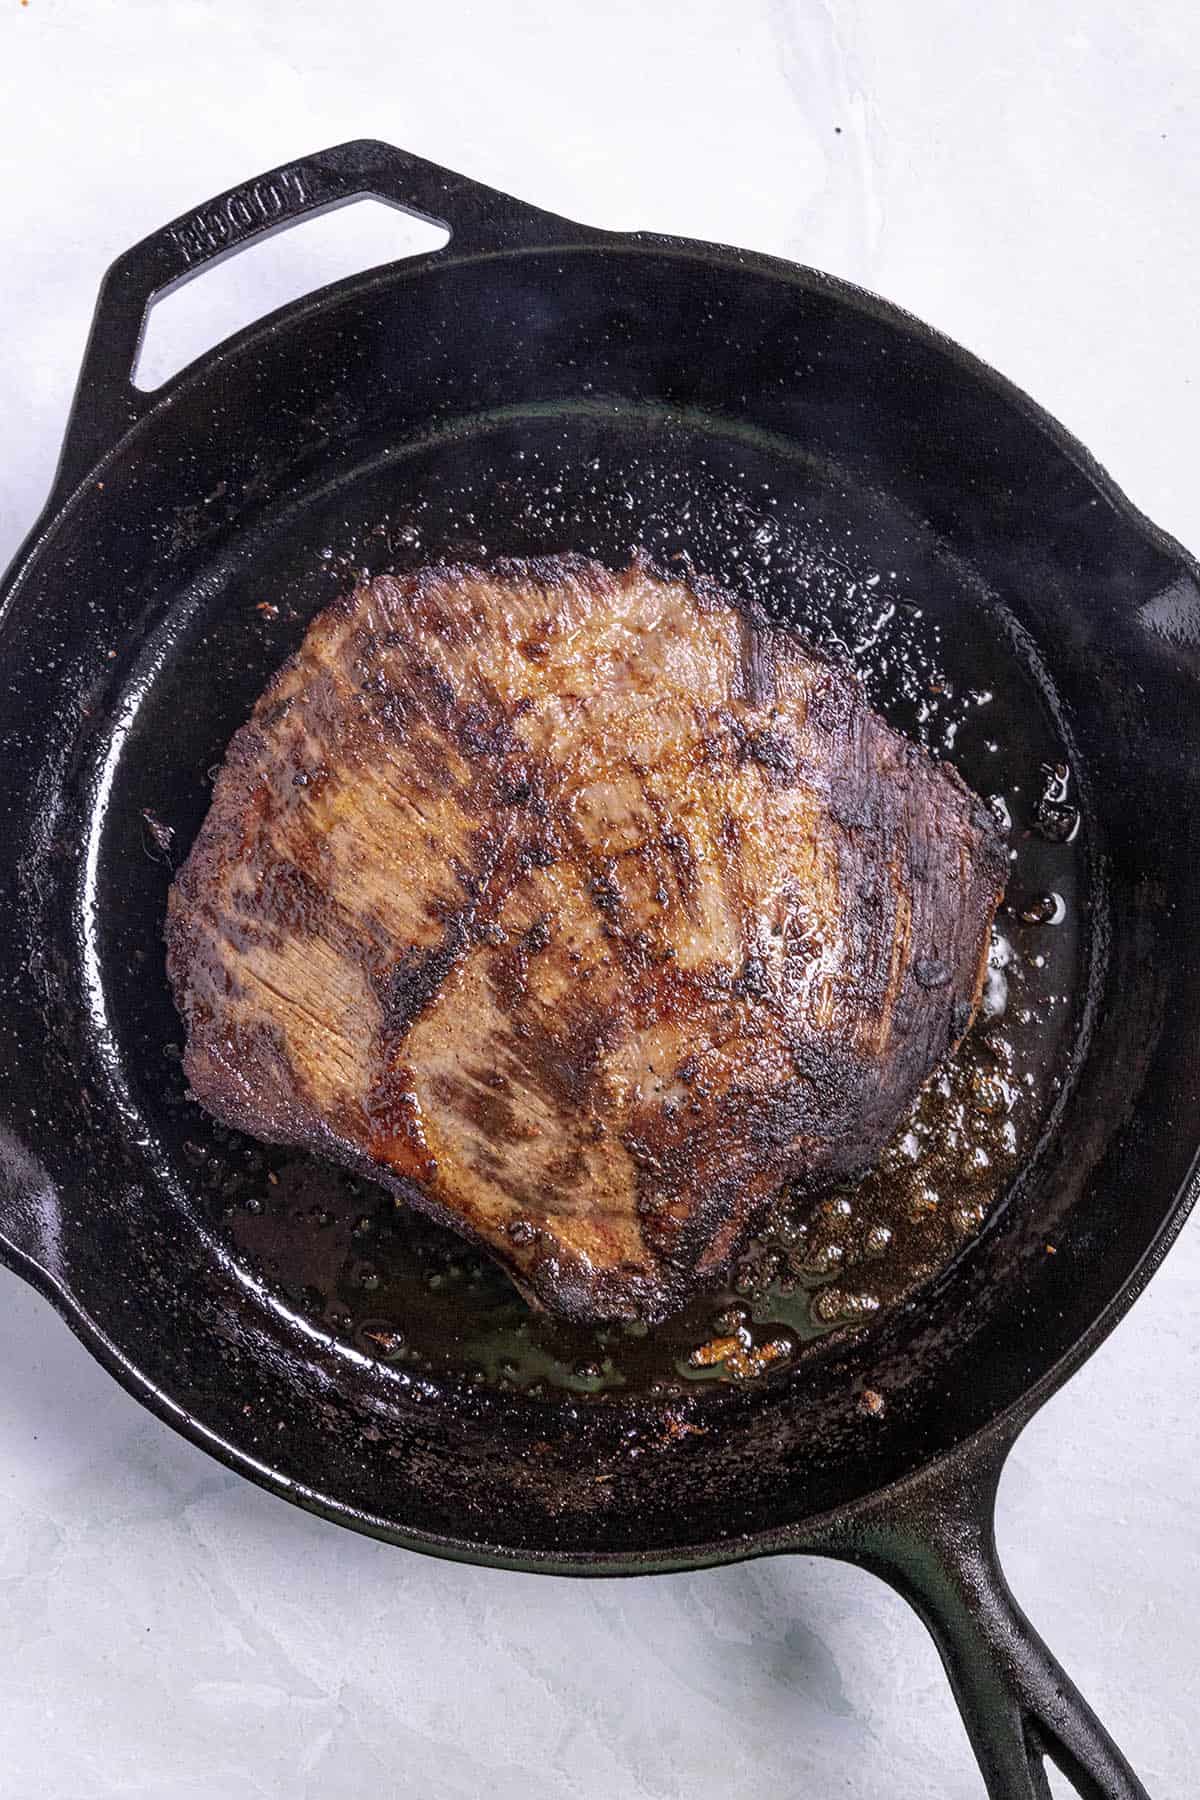 Searing the marinated flank steak to make Steak Fajitas